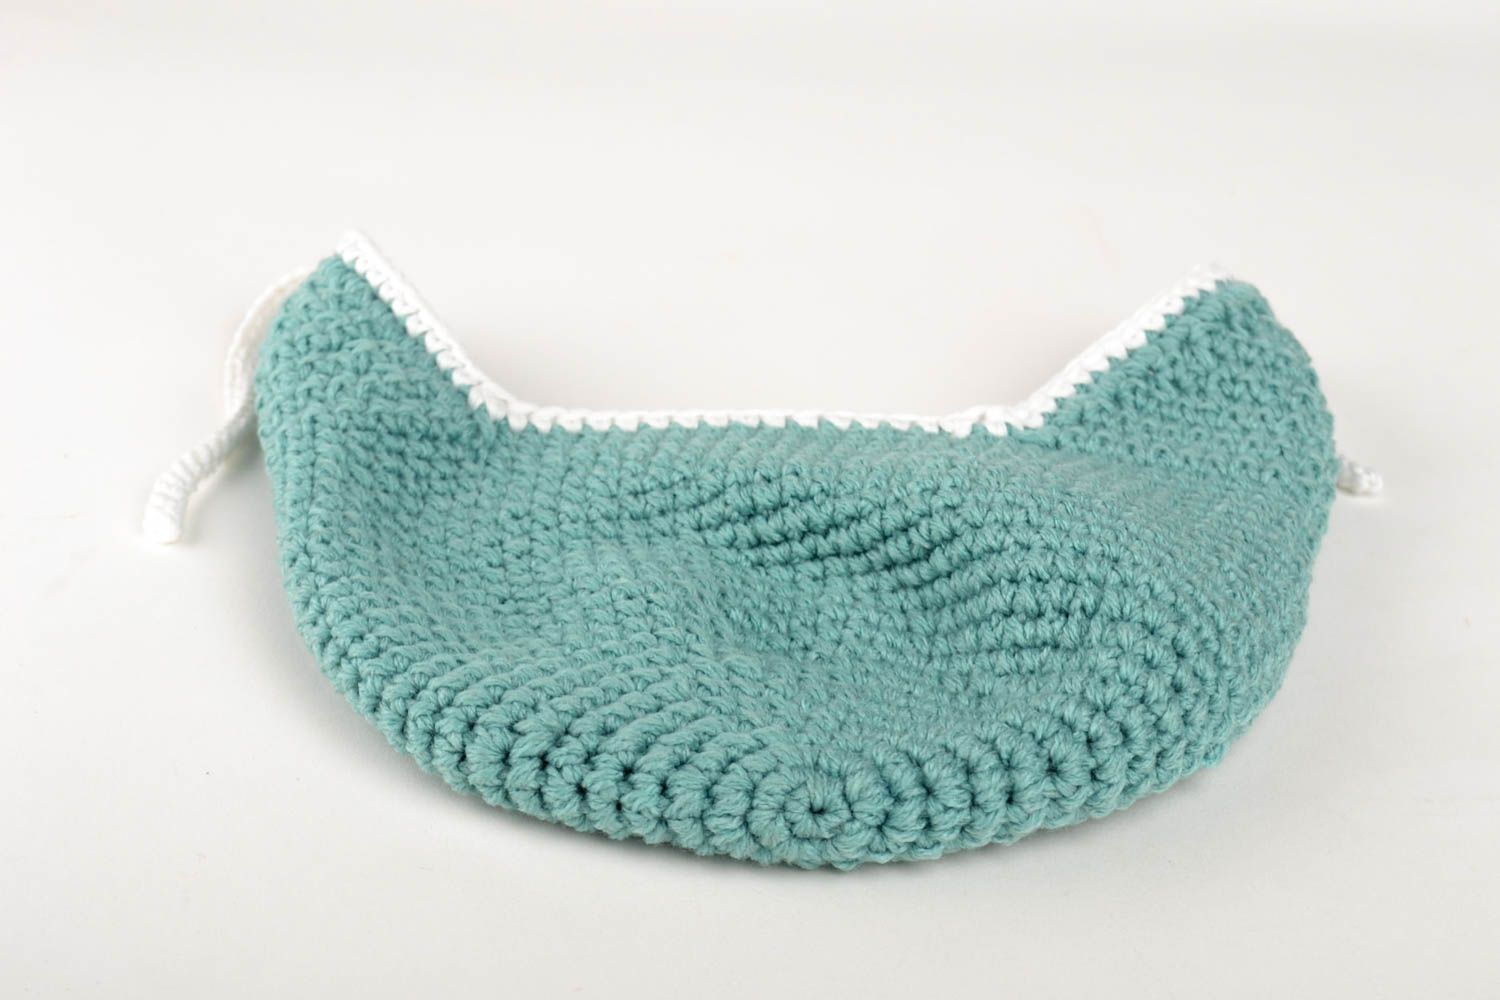 Unusual handmade crochet hat cute baby hats head accessories for kids gift ideas photo 3